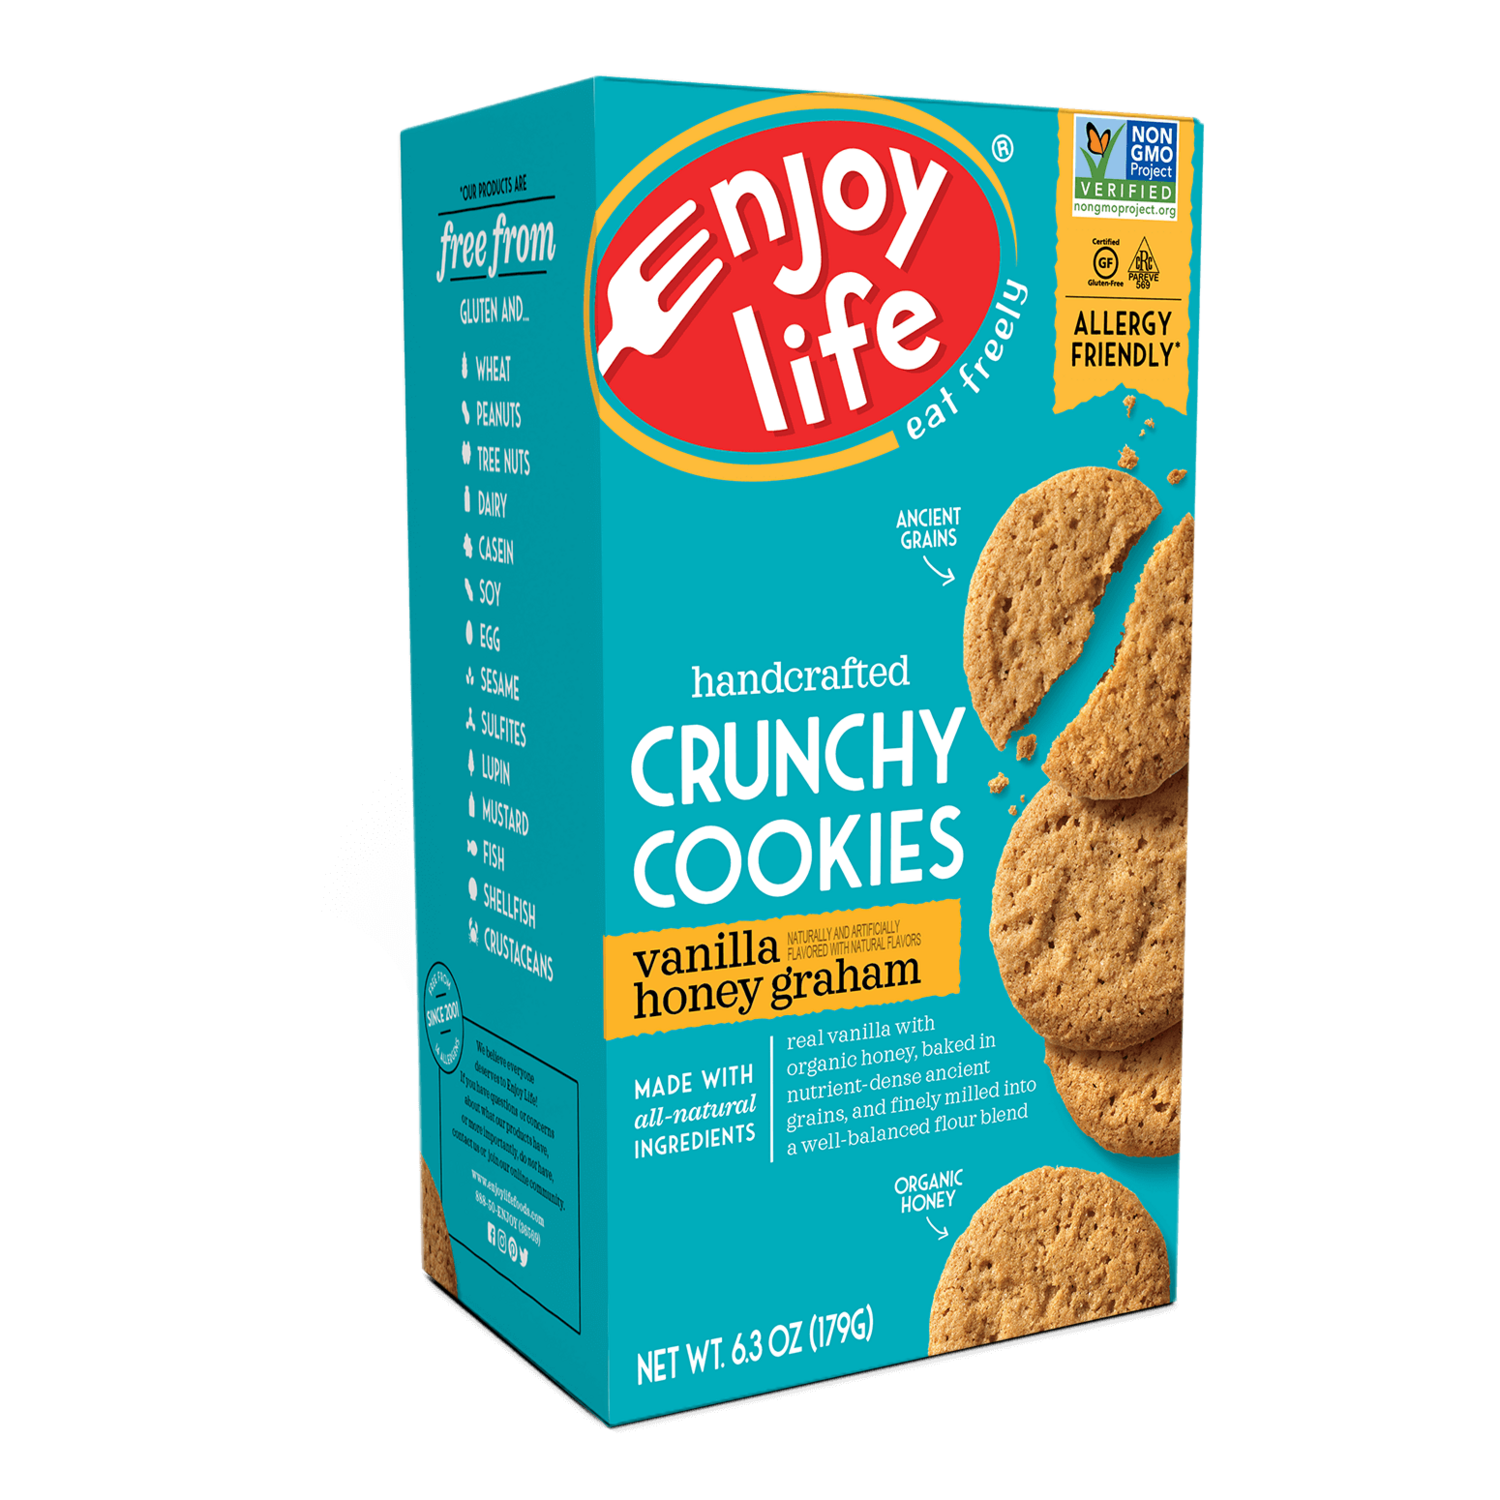 Enjoy Life Crunchy Cookies Vanilla Honey Graham Allergy Friendly Gluten Free